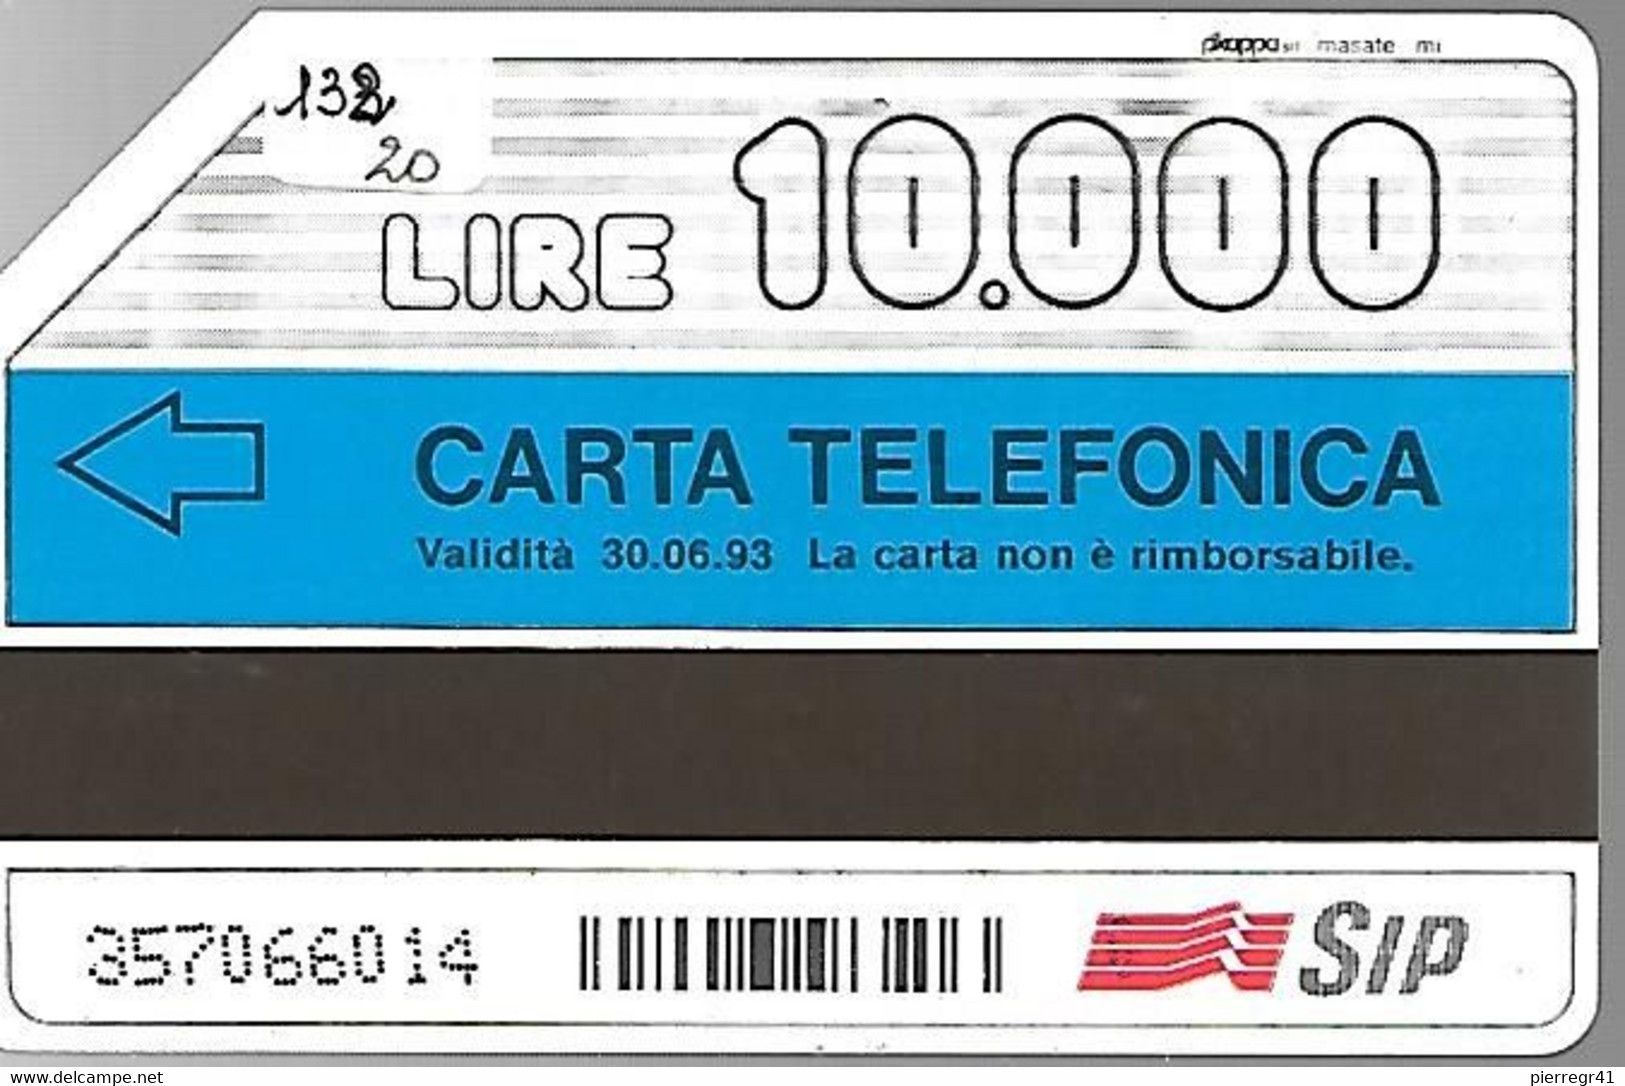 CARTE -ITALIE-Serie Pubblishe Figurate-Catalogue Golden-10000L-ISOLA ARTIGIANATO-N°138-30/06/93-Pik -Utilisé-TBE-RARE - Public Precursors